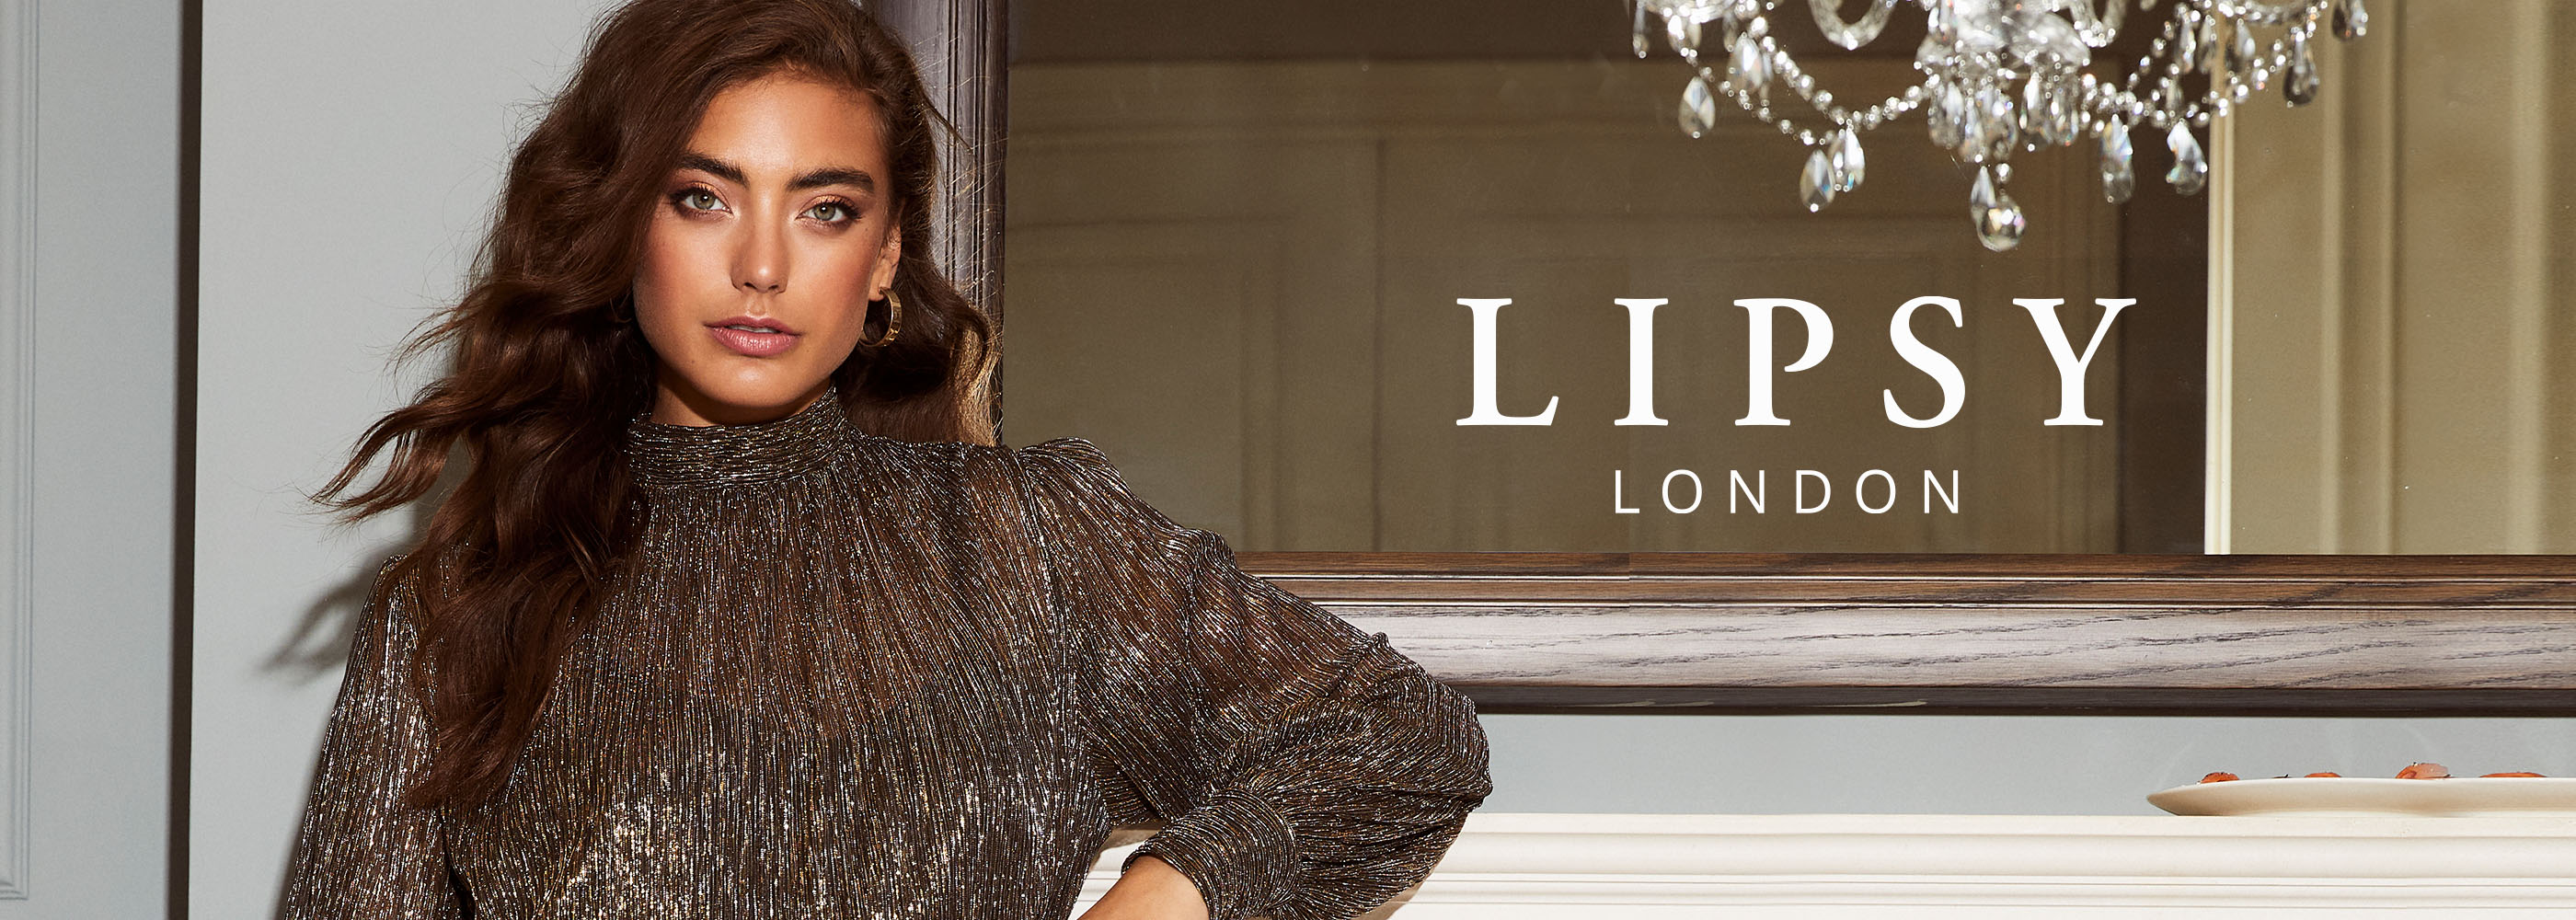 Lipsy London Collection, New Season Styles